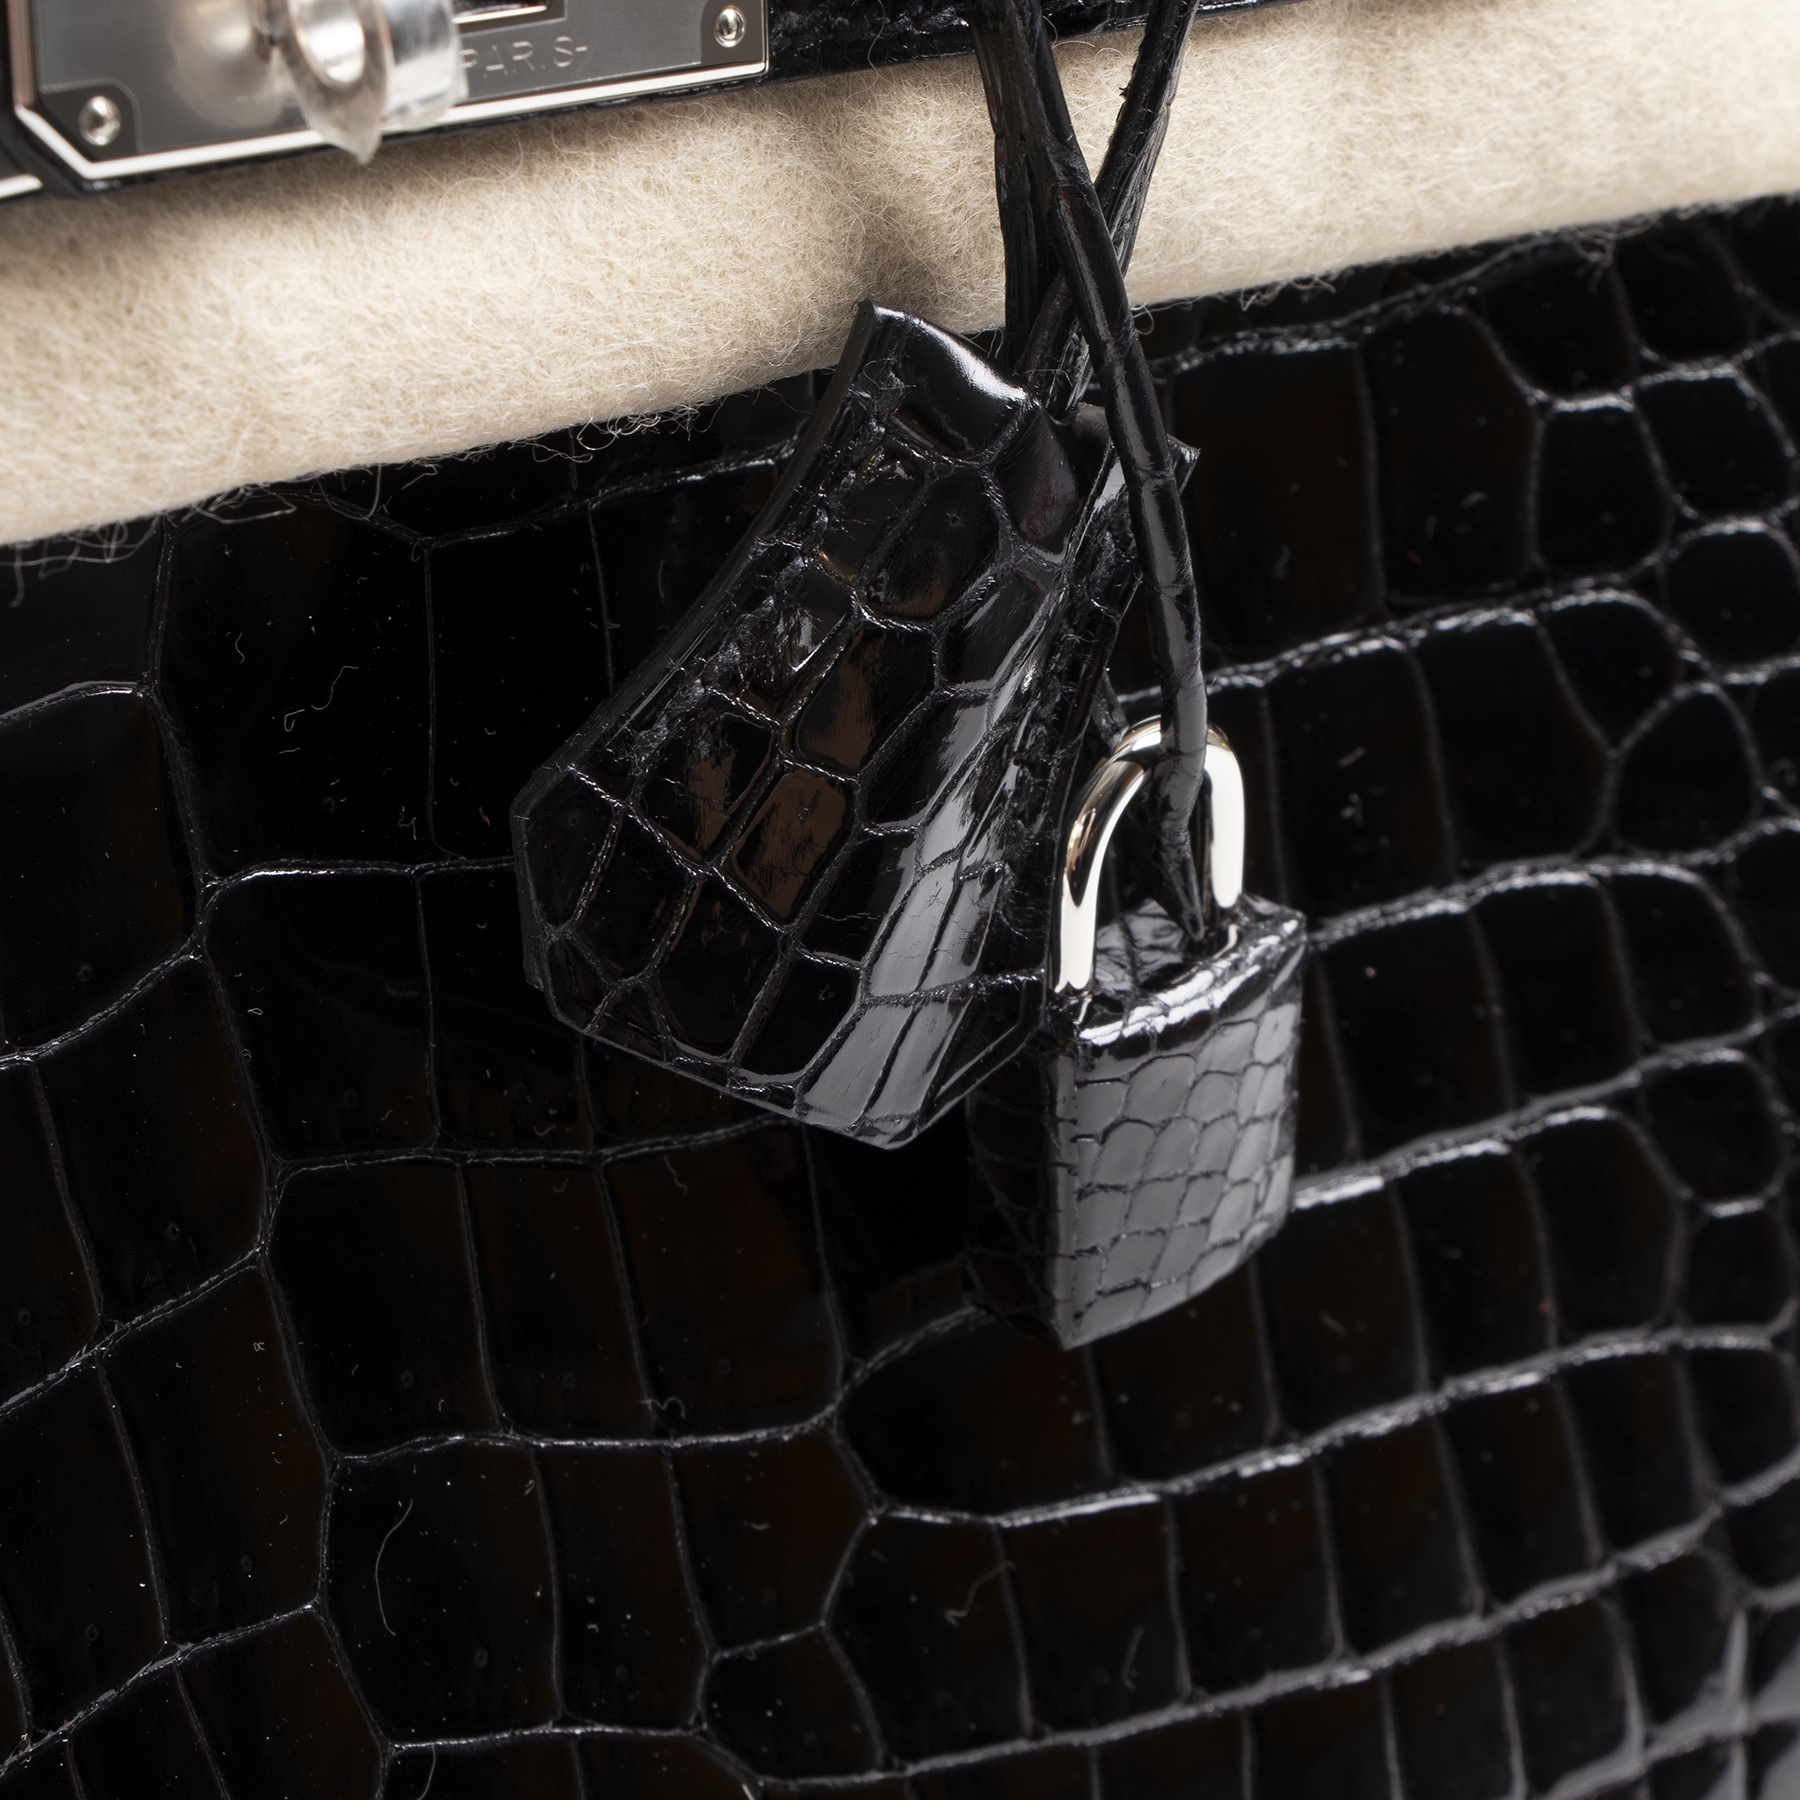 Hermès Birkin 30 Porosus Crocodile Black | SACLÀB